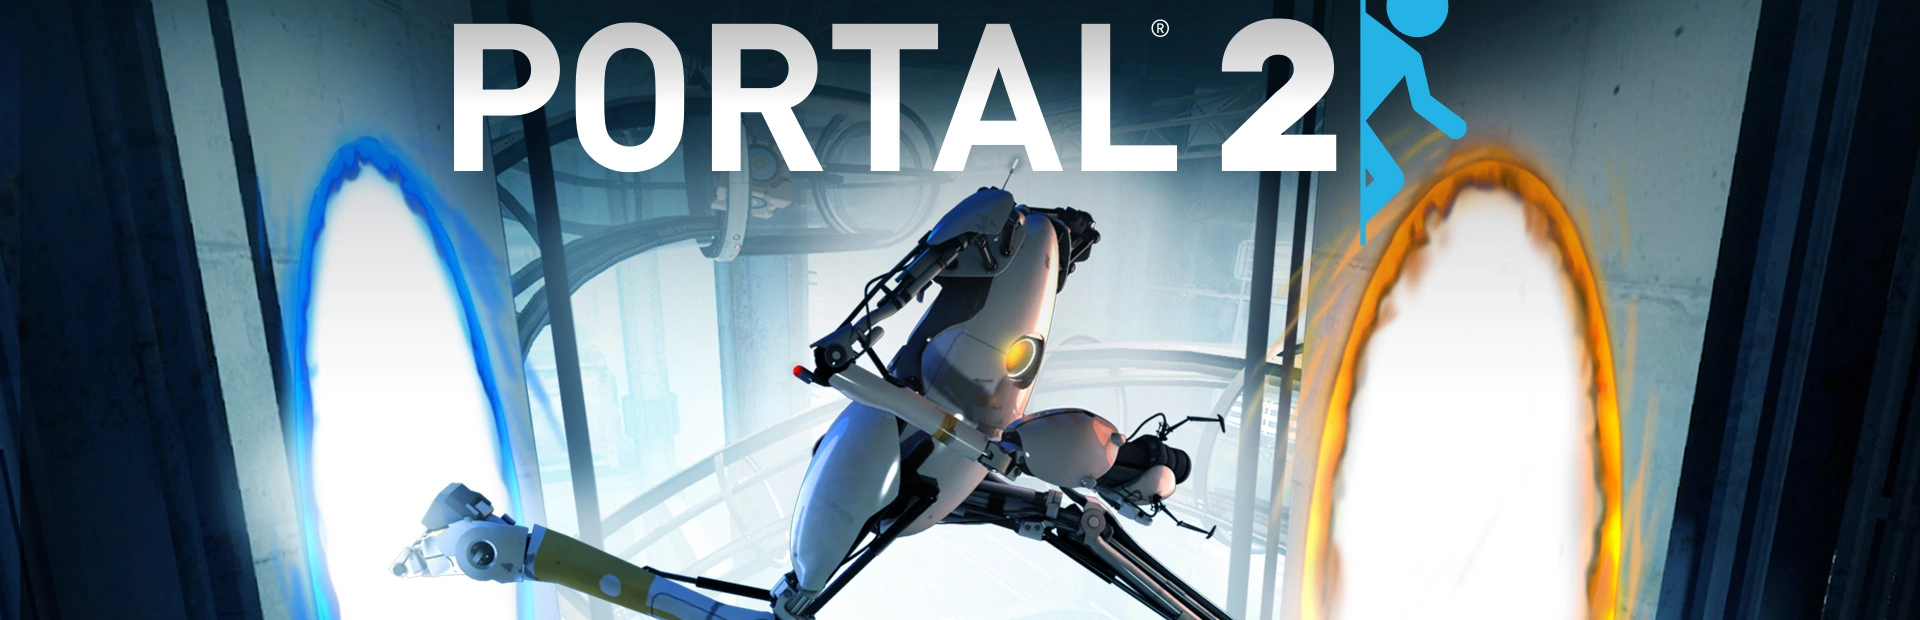 portal.2.banner4